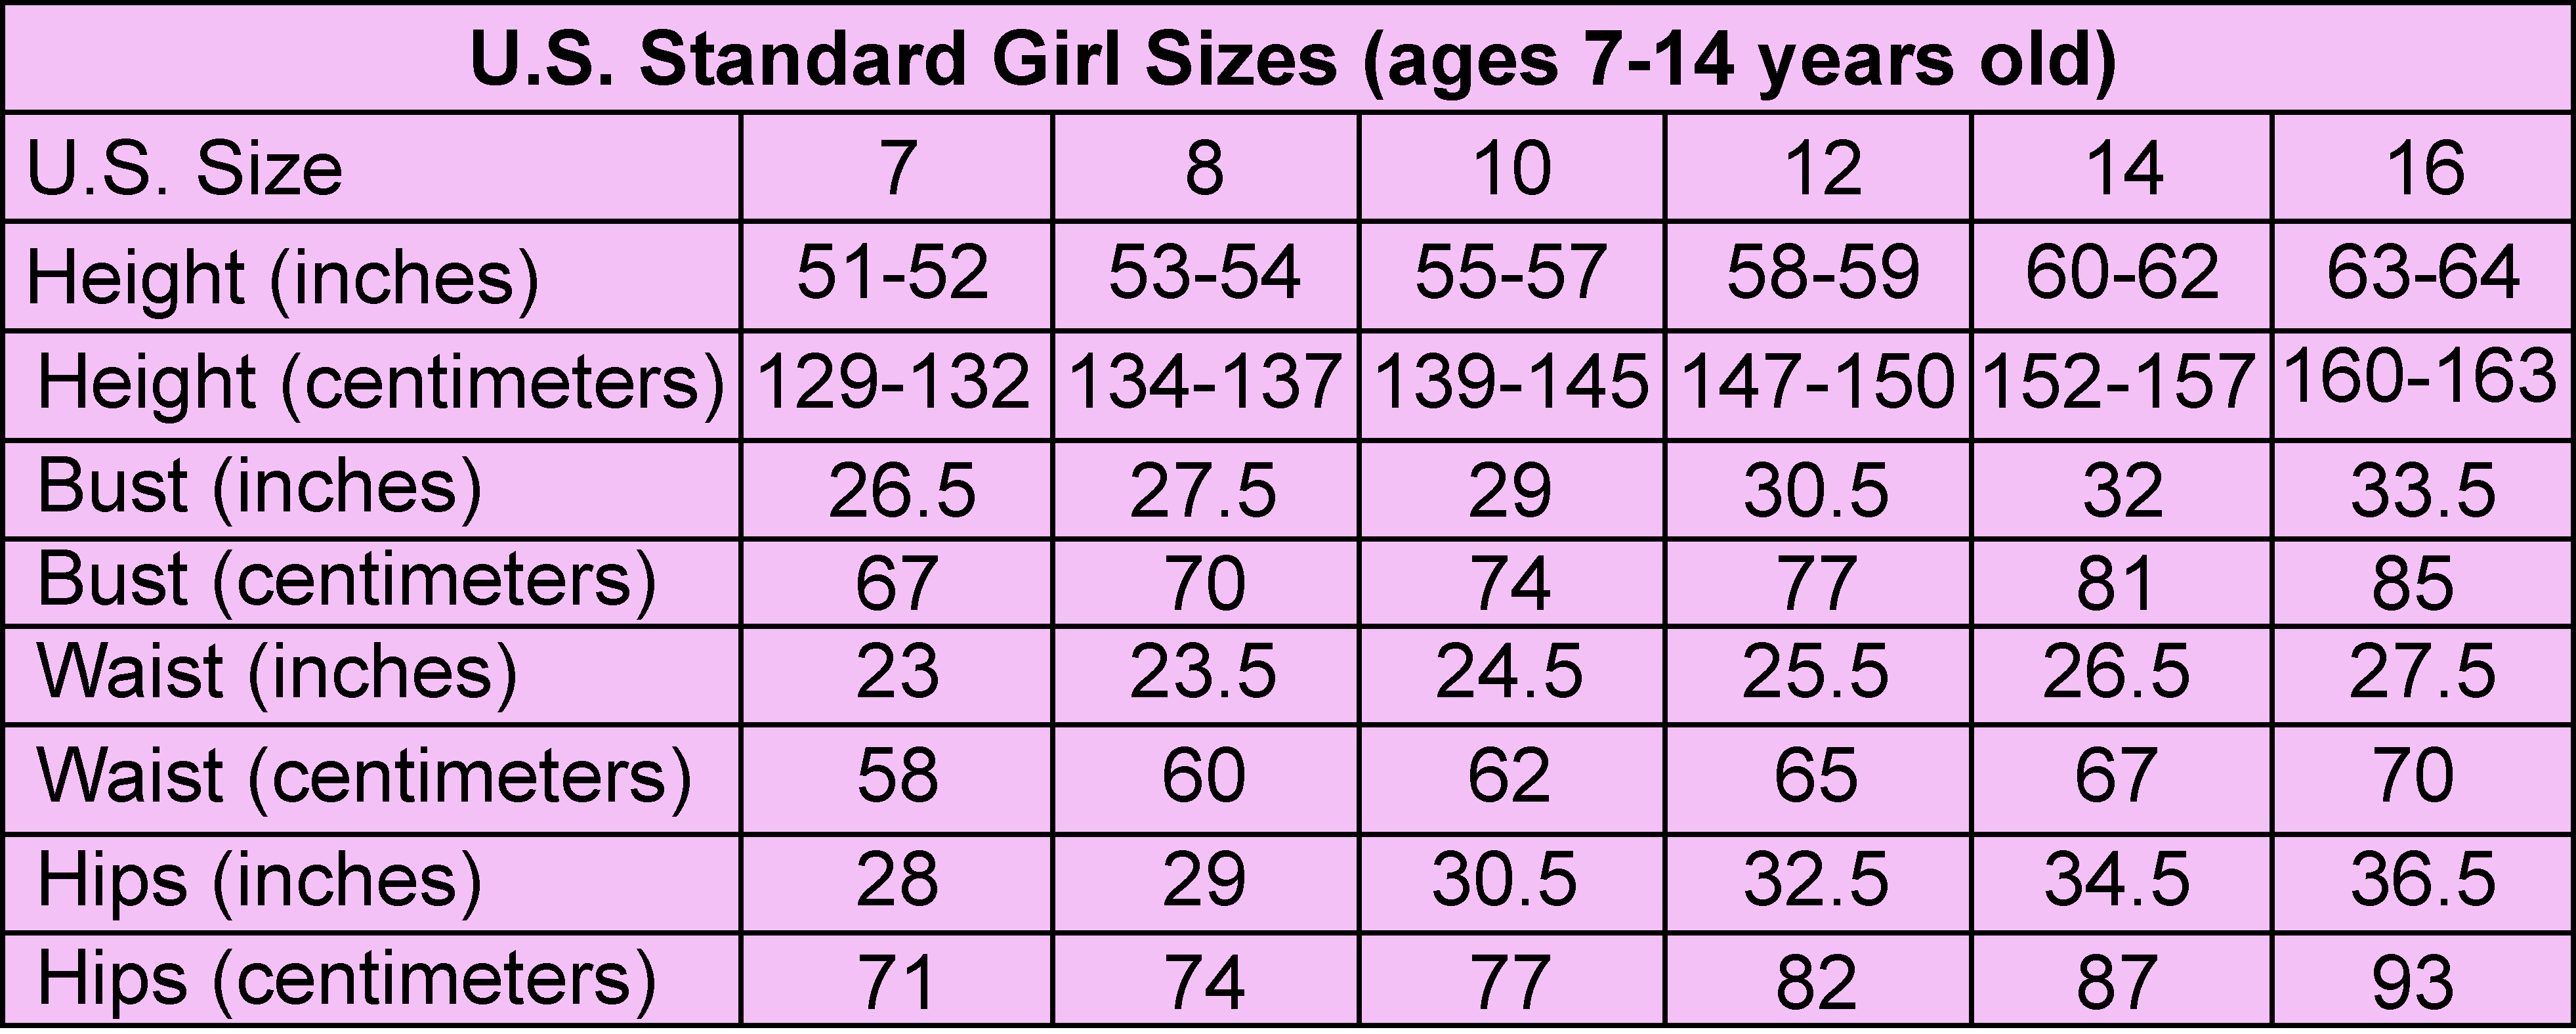 average shoe size for 10 year old boy us